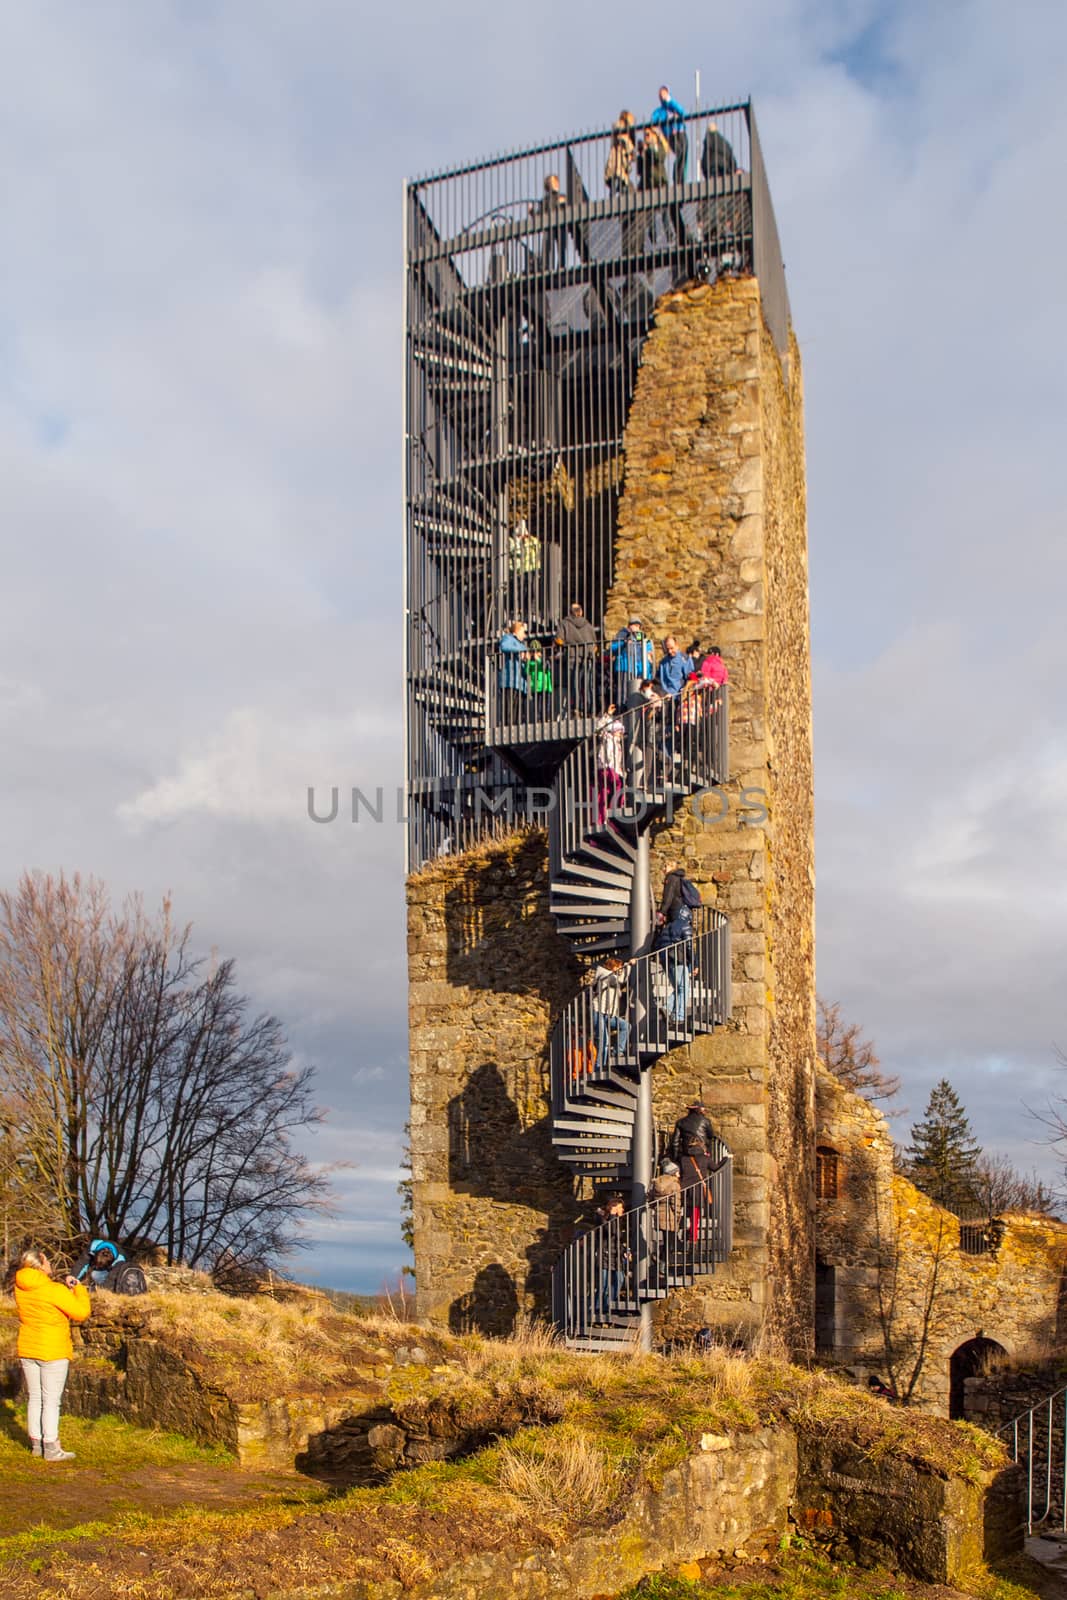 Orlik nad Humpolcem castle tower after reconstruction with many tourists on the top, Vysocina, Czech Republic.